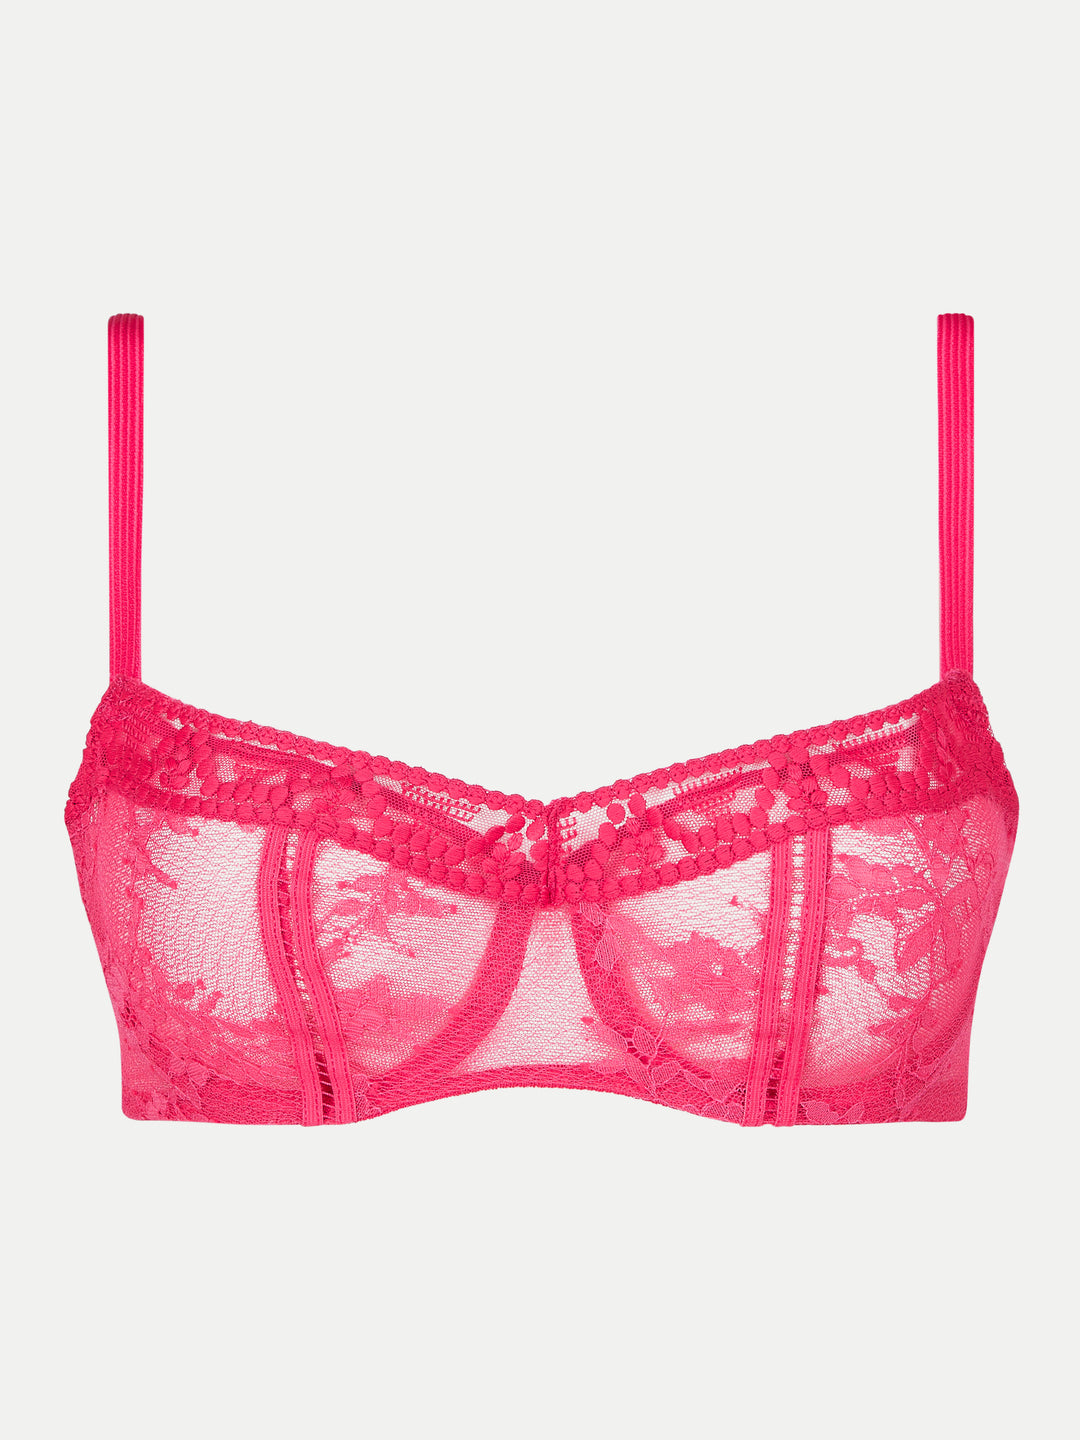 Passionata - 奧莉薇亞半杯胸罩紅粉紅色